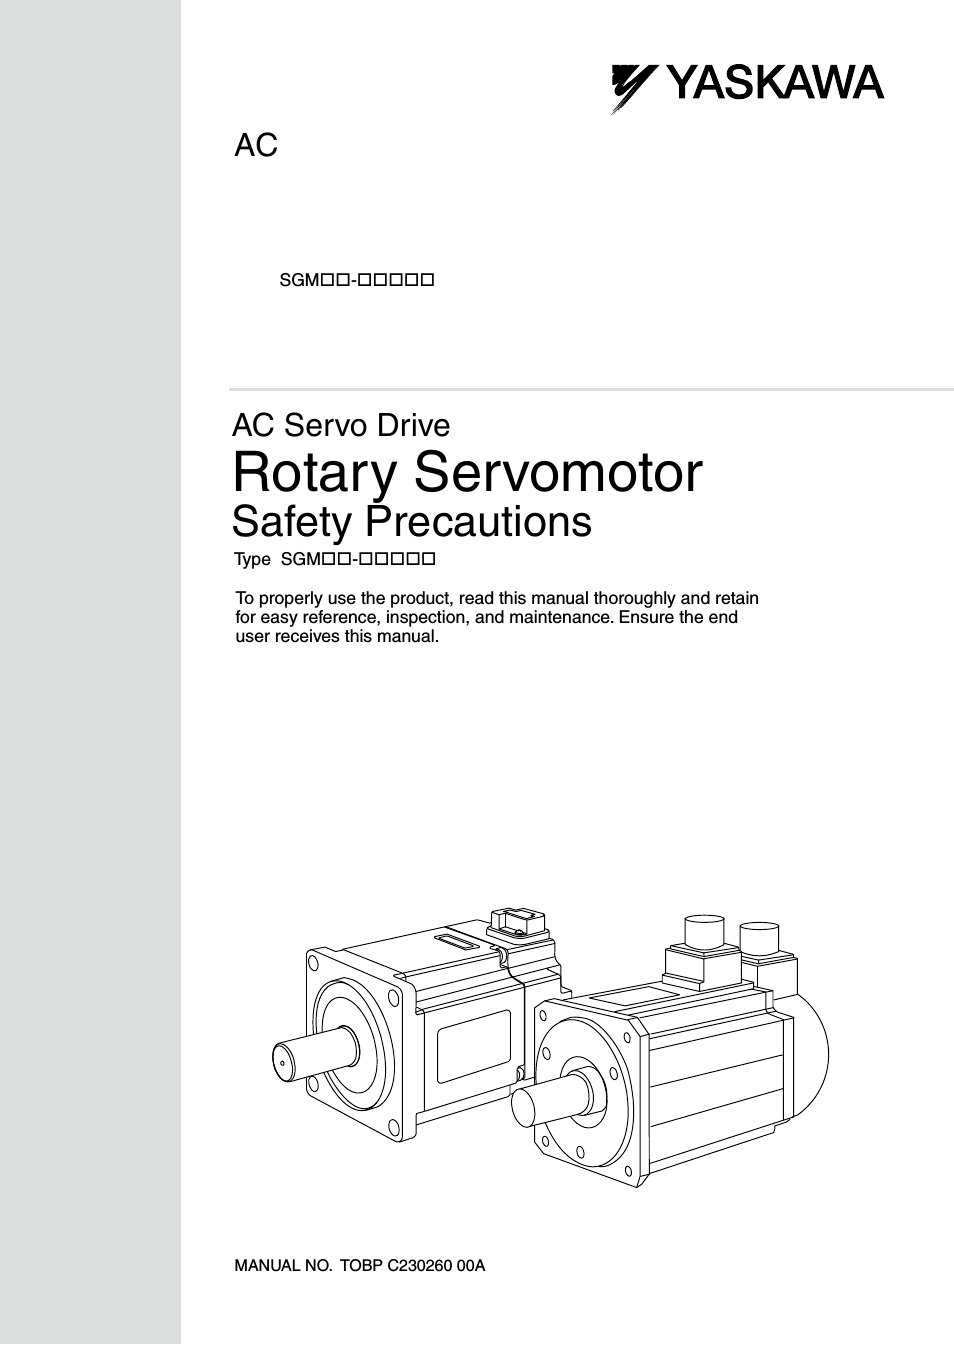 AC Servo Drive Rotary Servomotor Safety Precautions